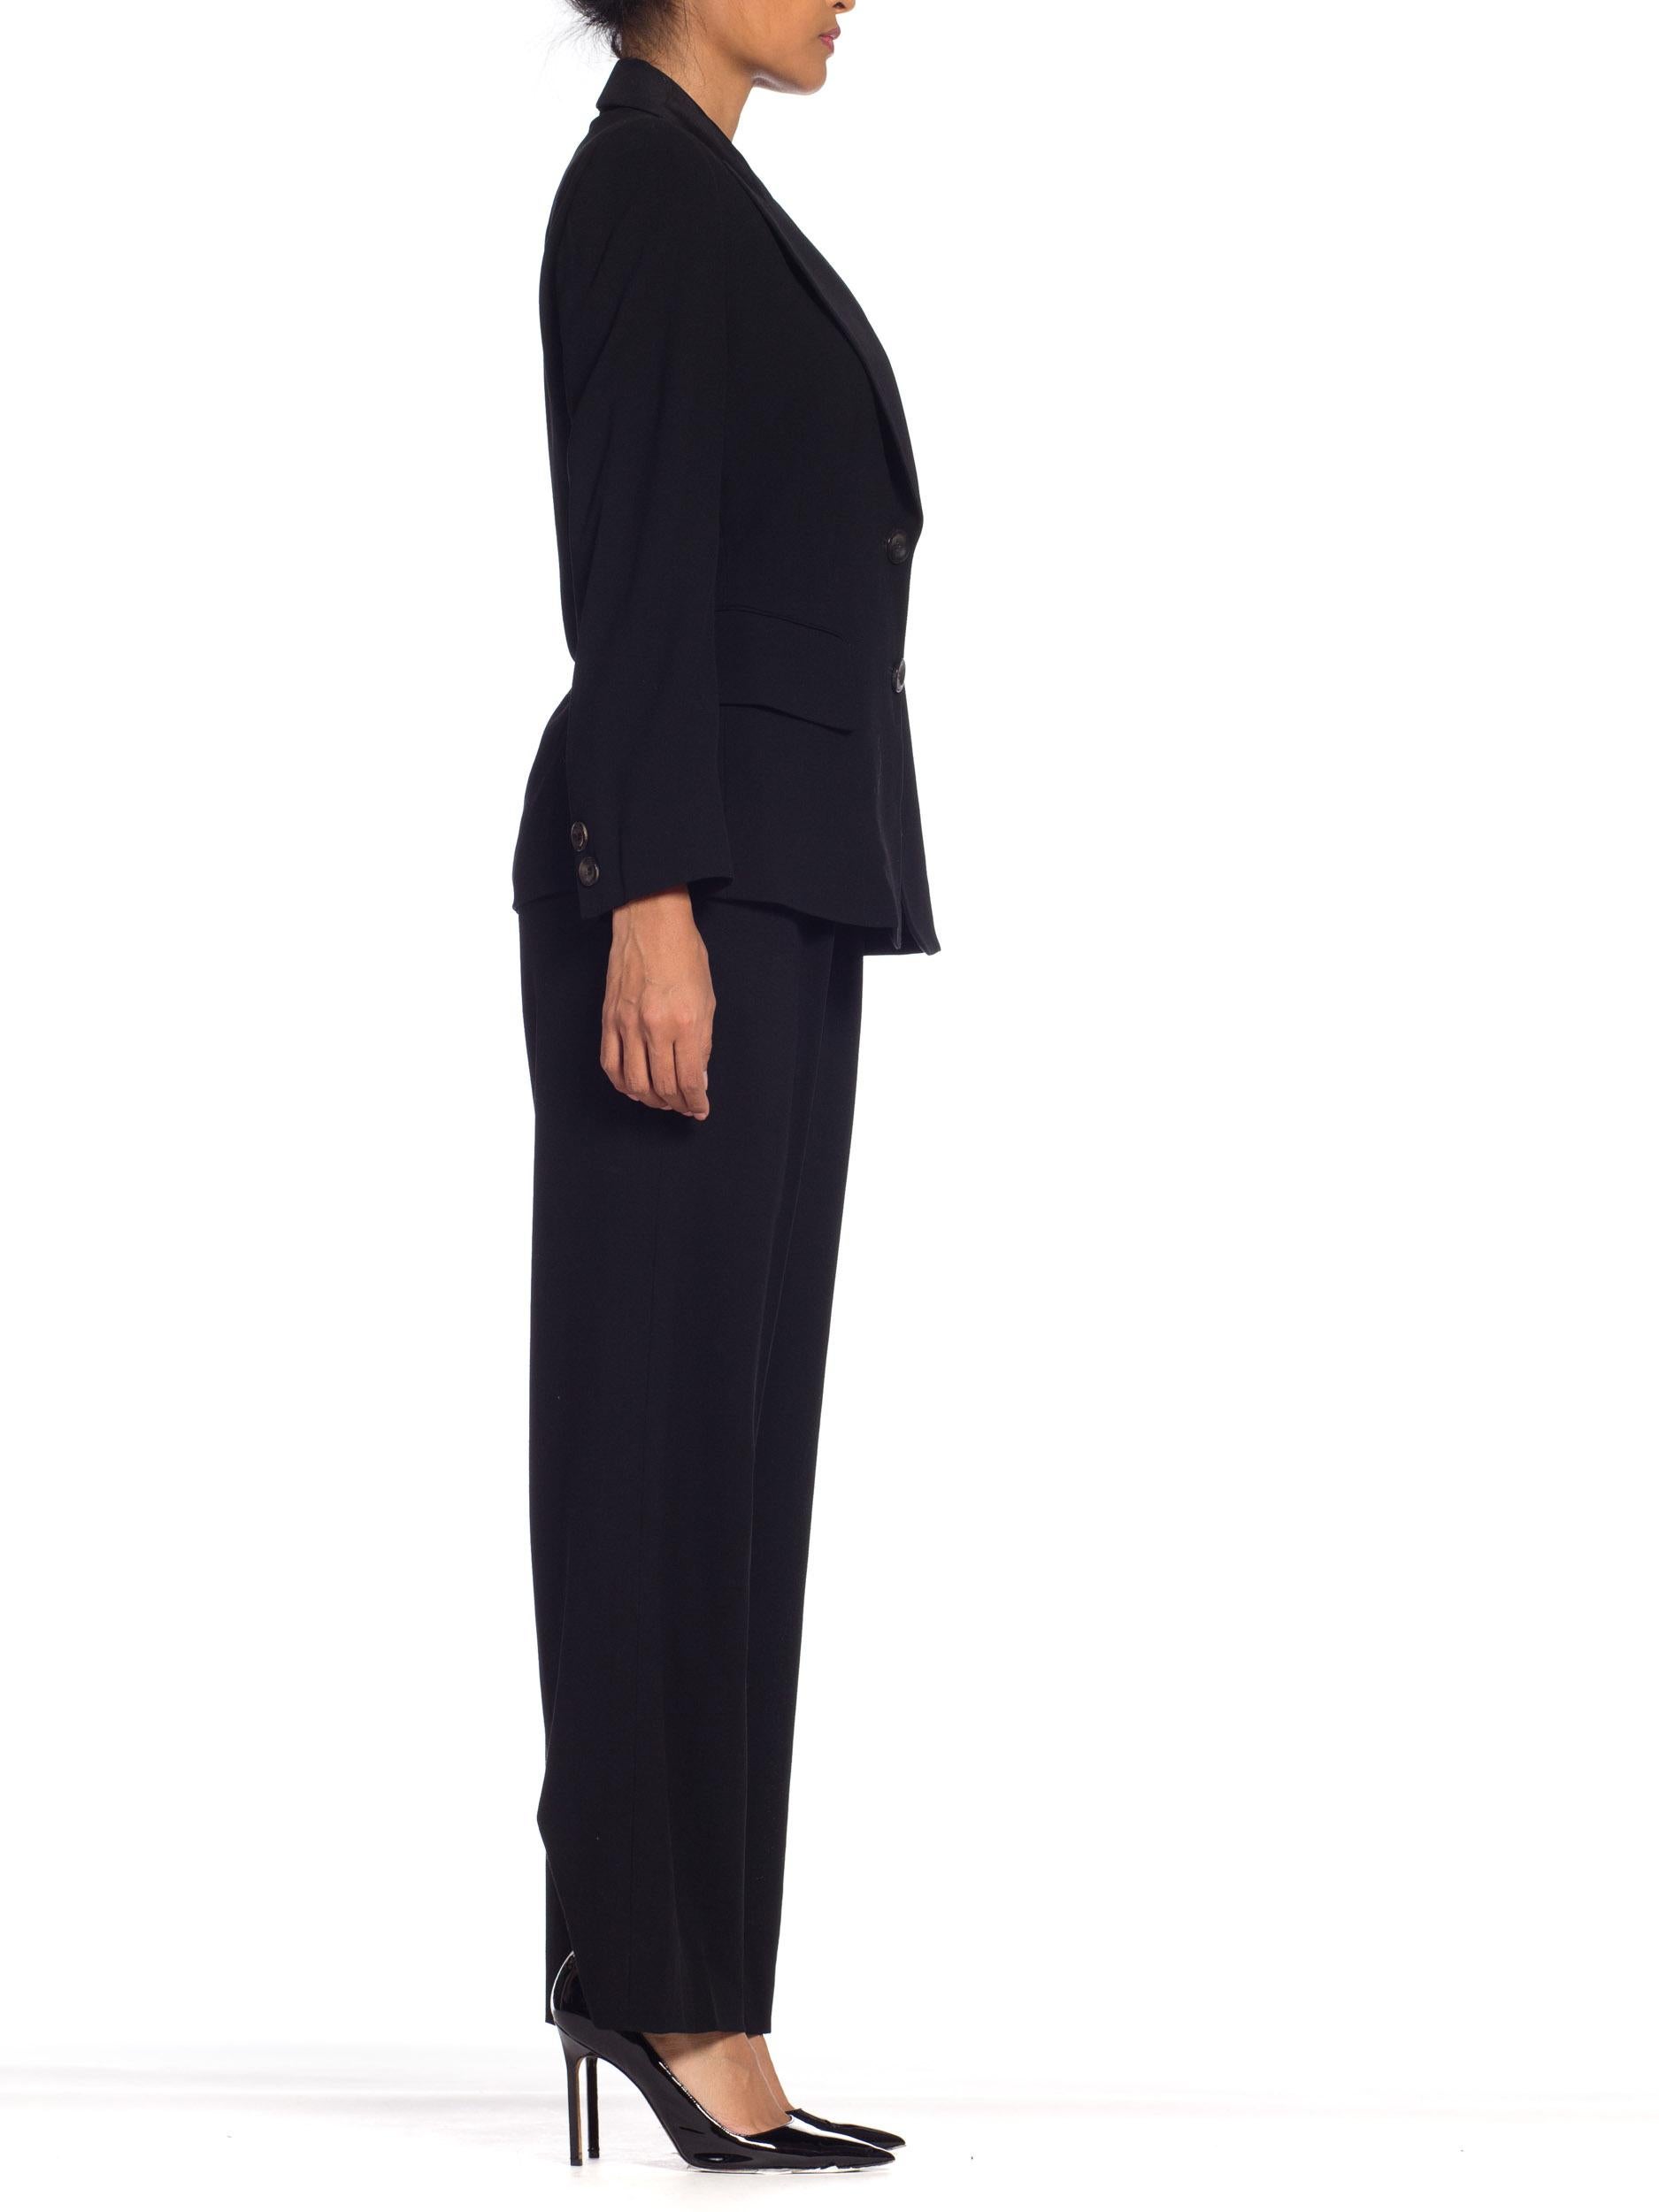 Women's 1990s Donna Karan YSL Style Tuxedo NWT